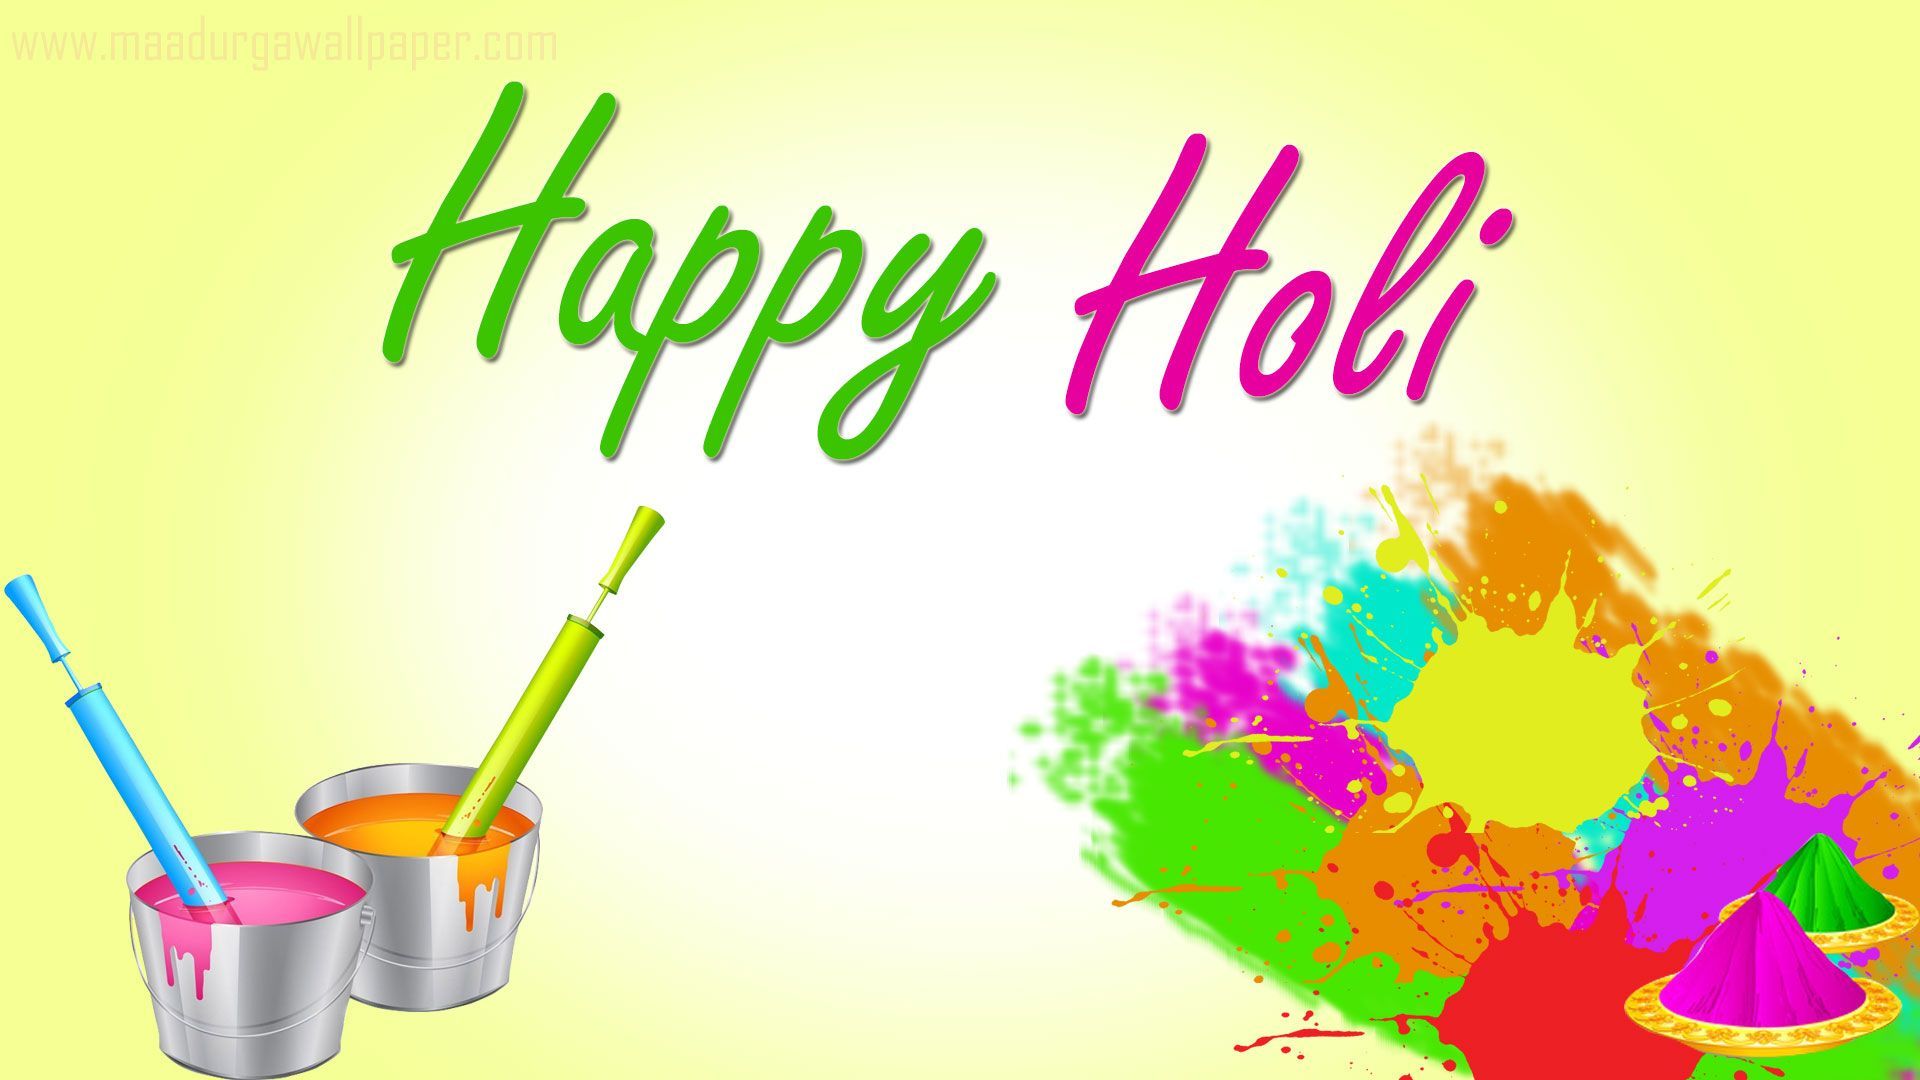 Happy Holi Wallpaper Holi Image download. Happy holi, Happy holi wallpaper, Happy holi image